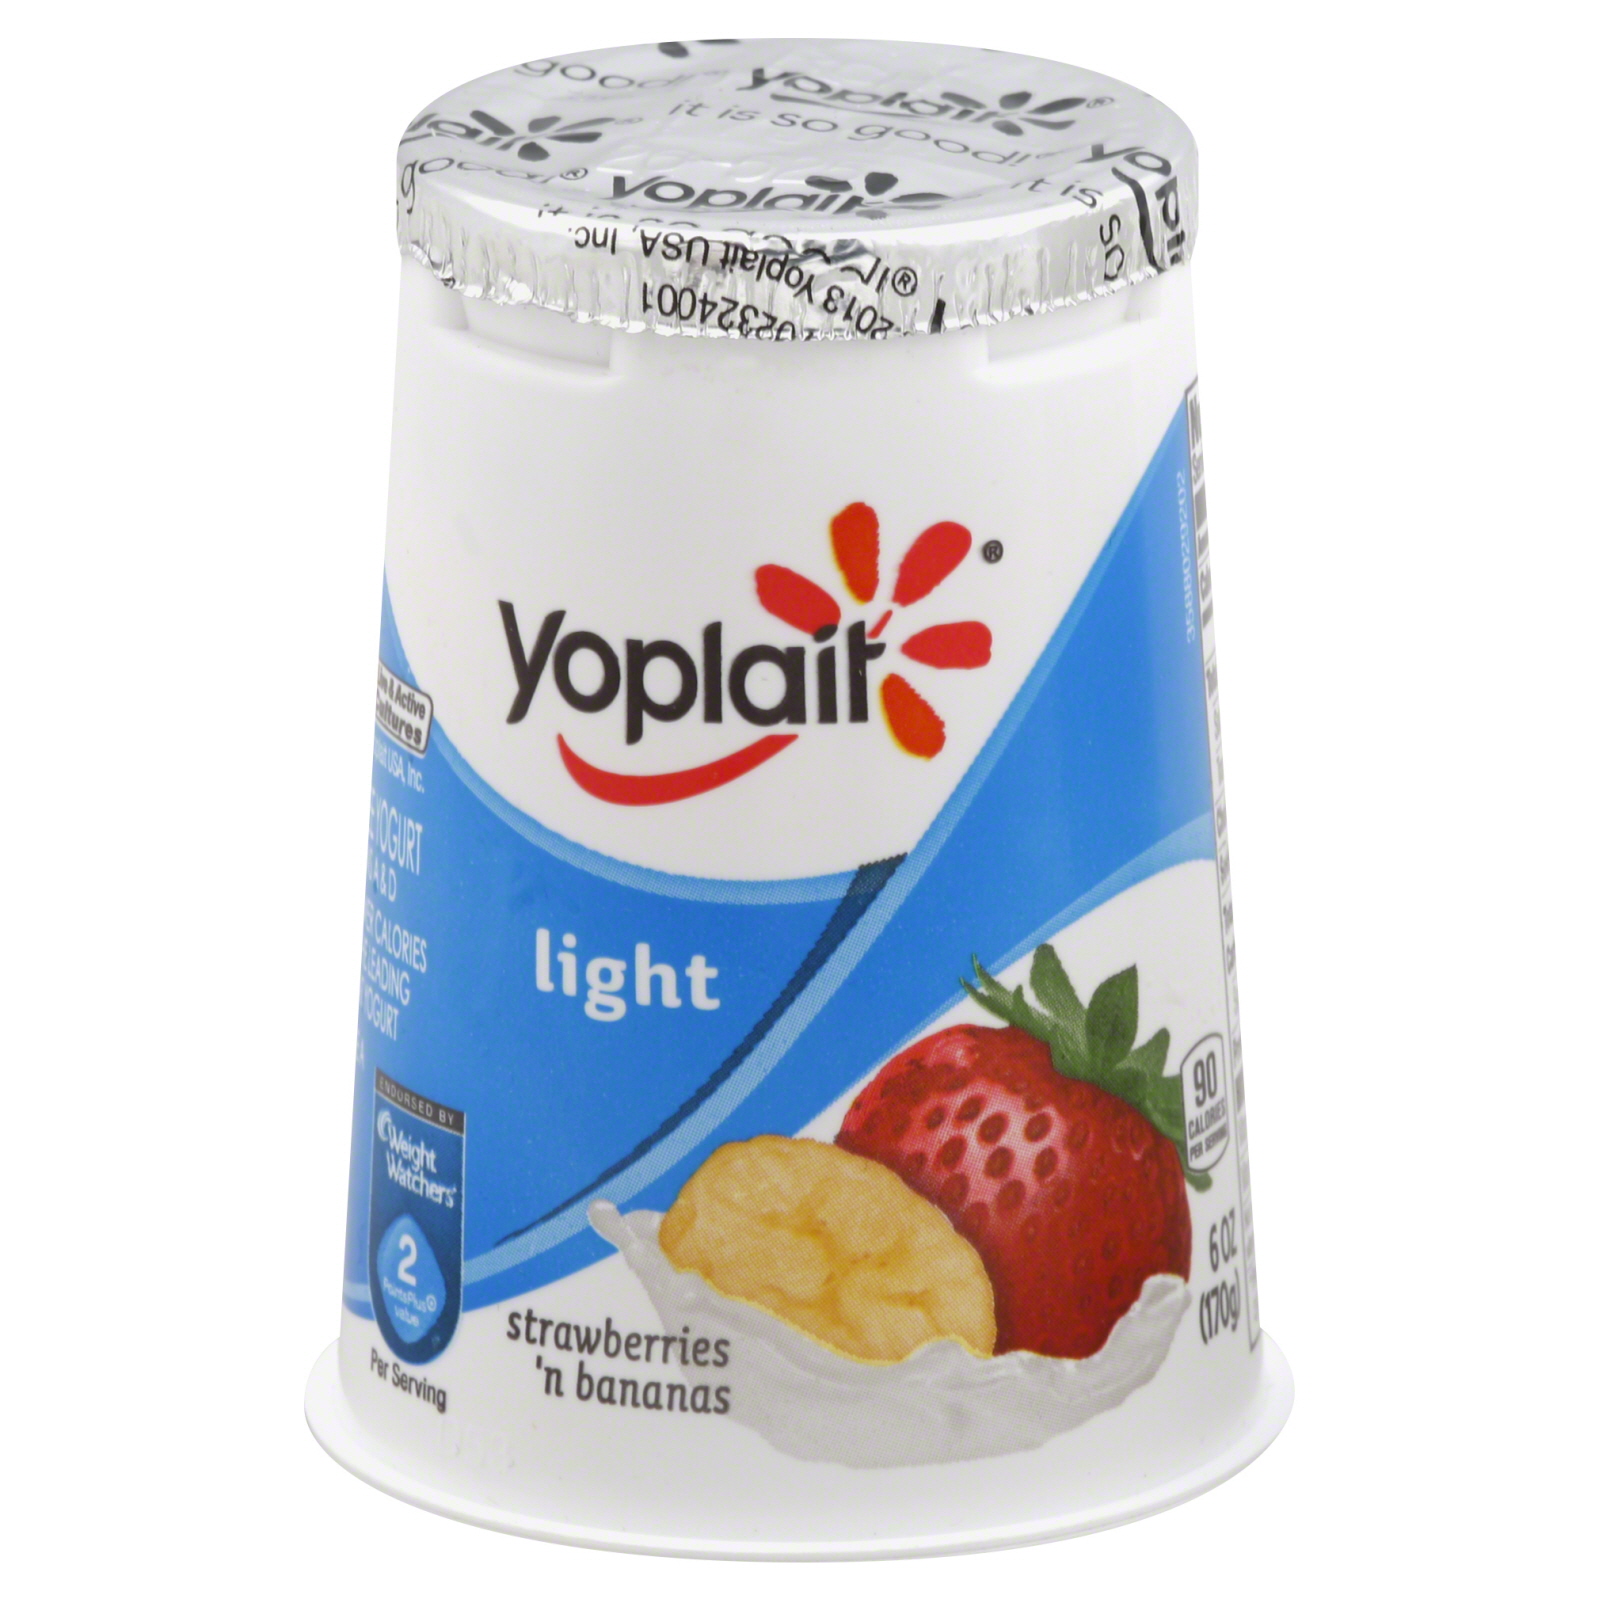 Yoplait Light Yogurt, Nonfat, Strawberries and Bananas, 6 oz (170 g)